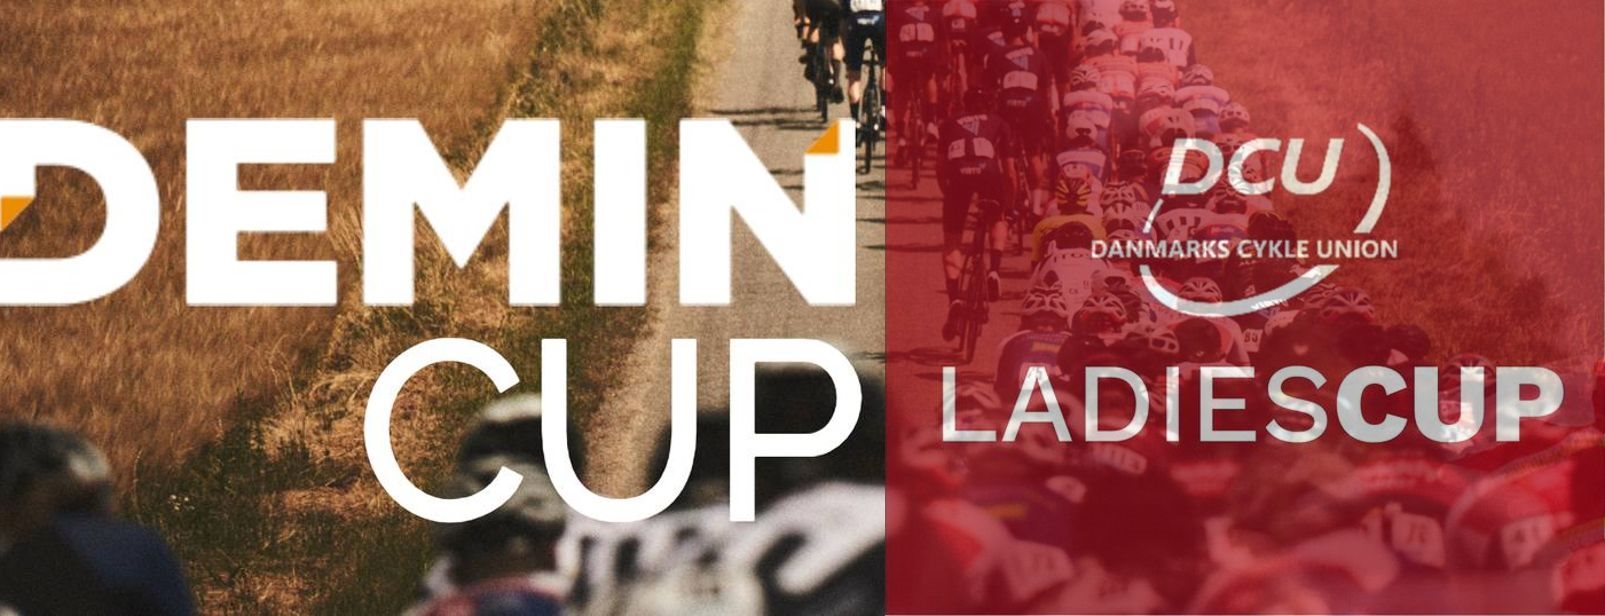 Holbæk CS Demin Cup //Ladies Cup // Uno-X Cup 1. afd.